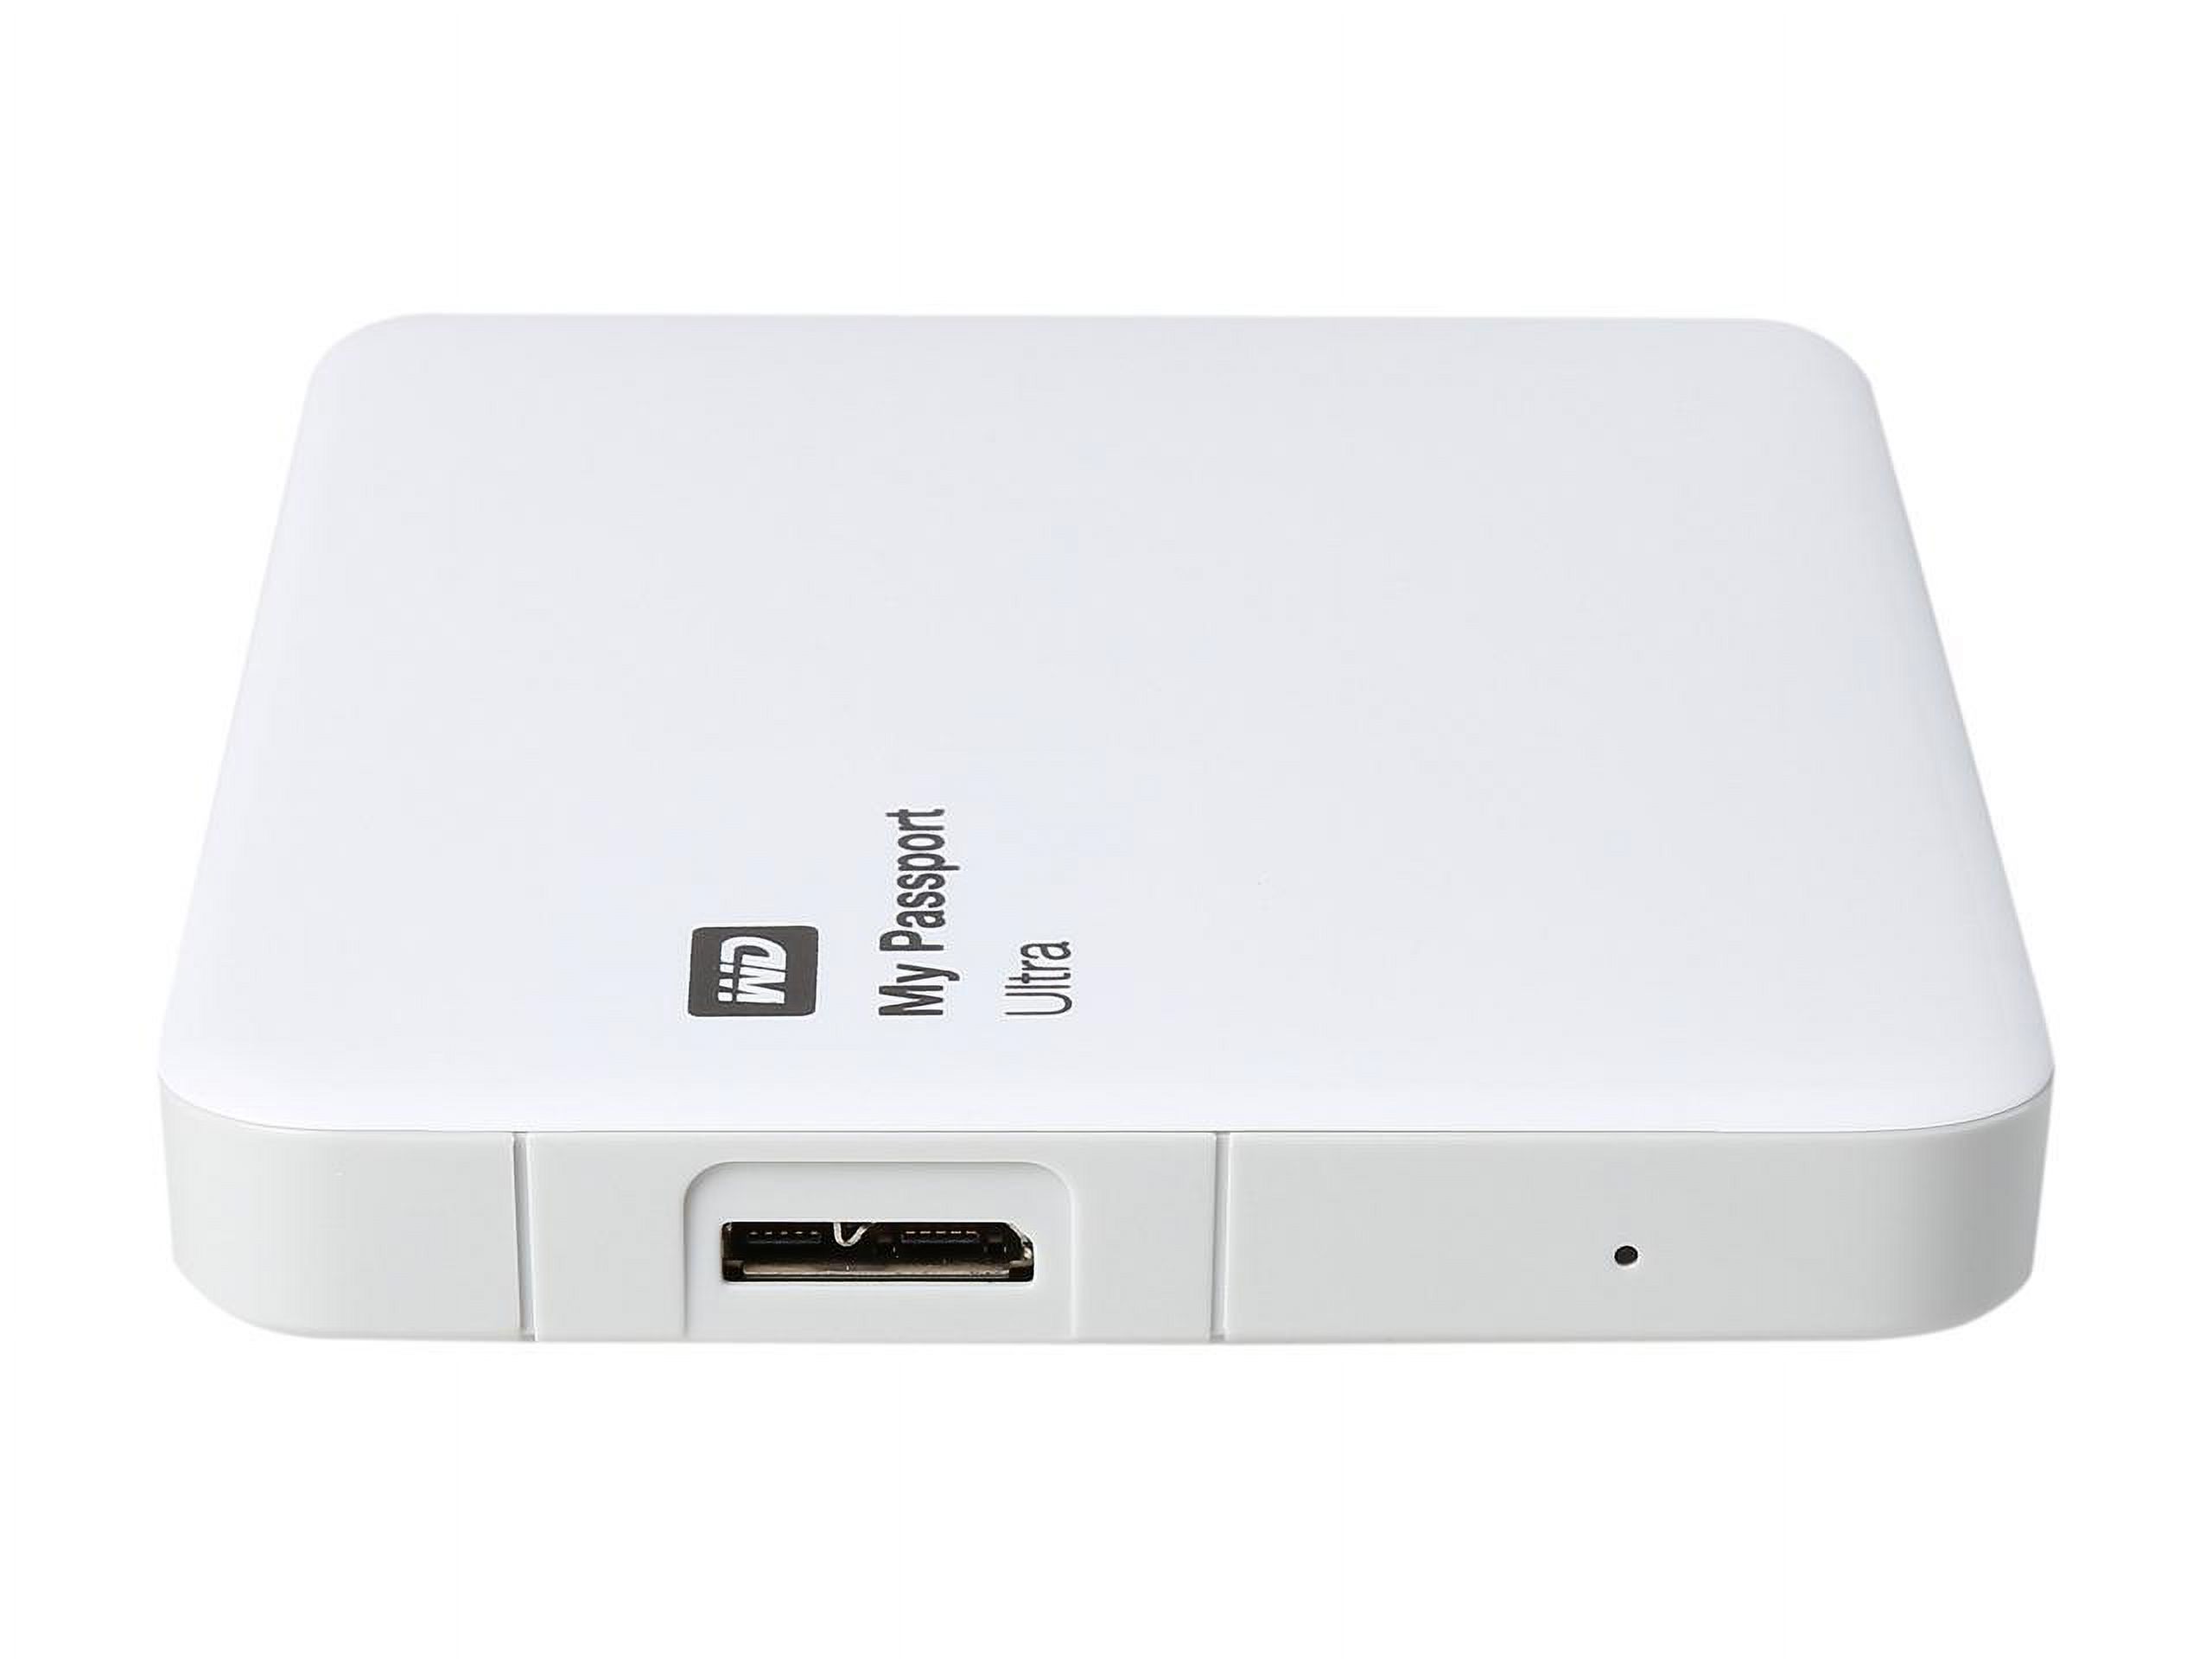 WD My Passport Ultra WDBGPU0010BWT-NESN 1 TB Portable Hard Drive, External, Brilliant White - image 3 of 5